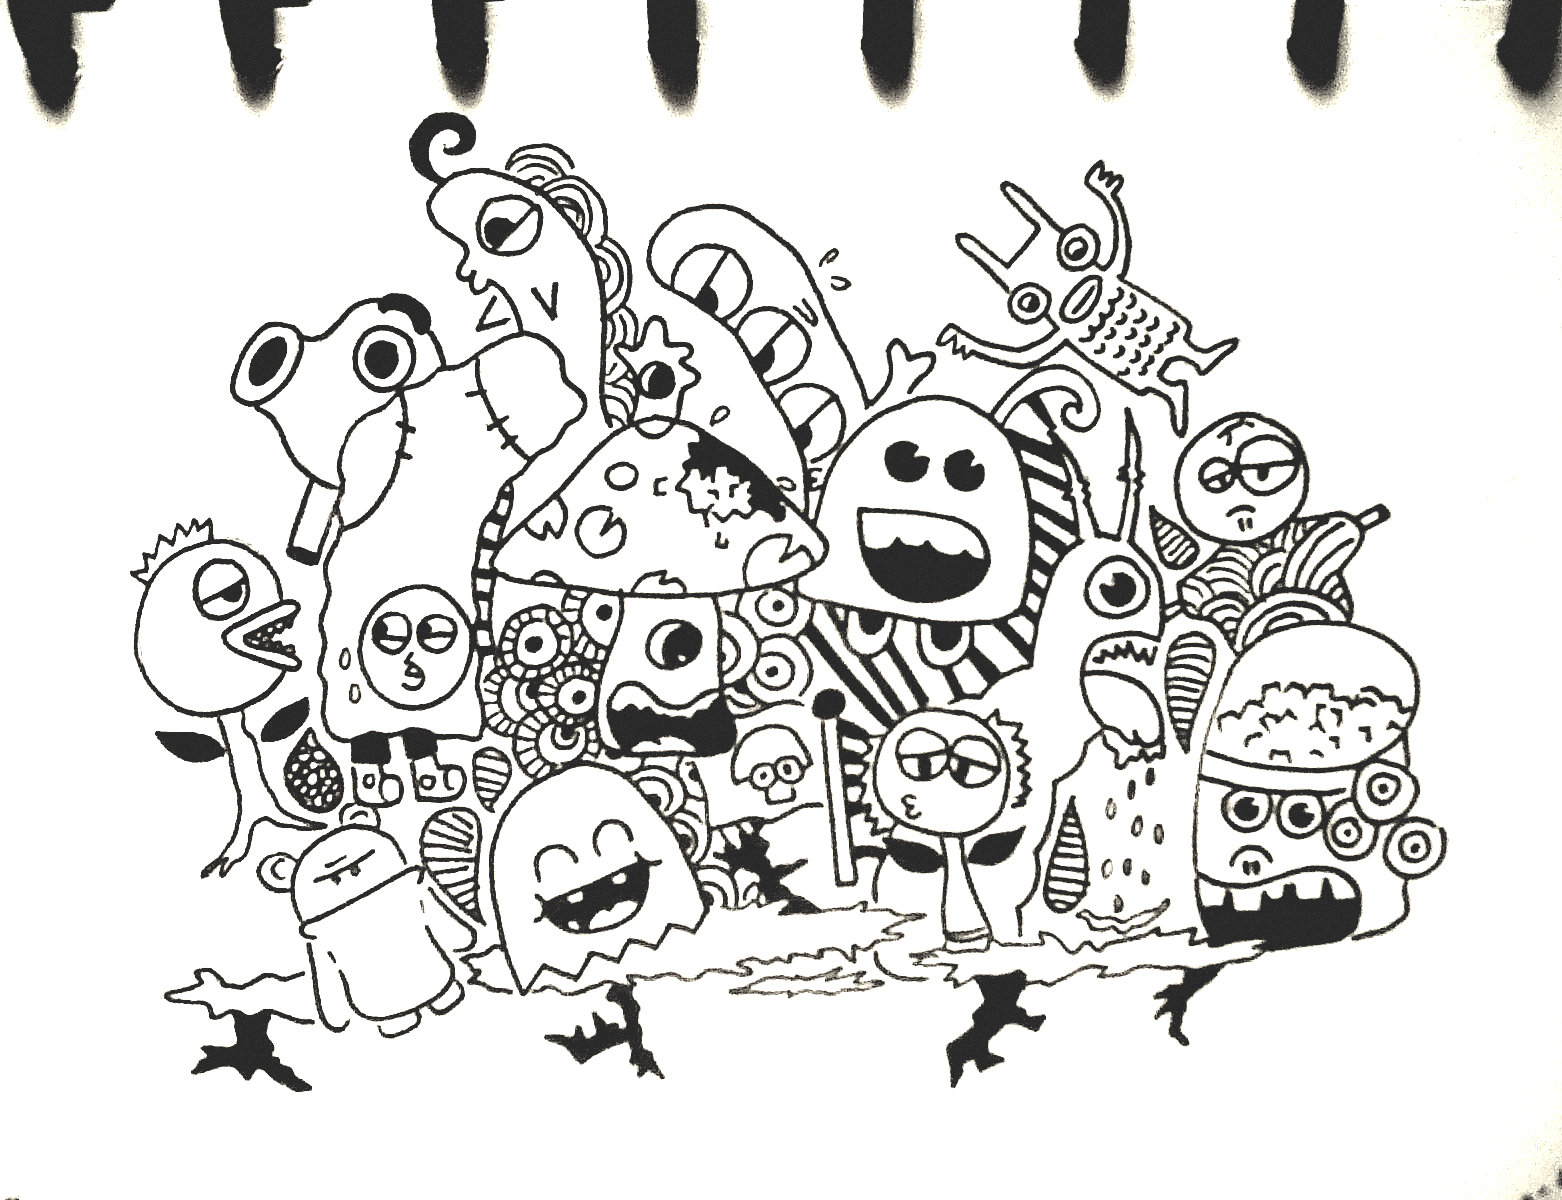 Doodle Monster By TikaAfni25 On DeviantArt